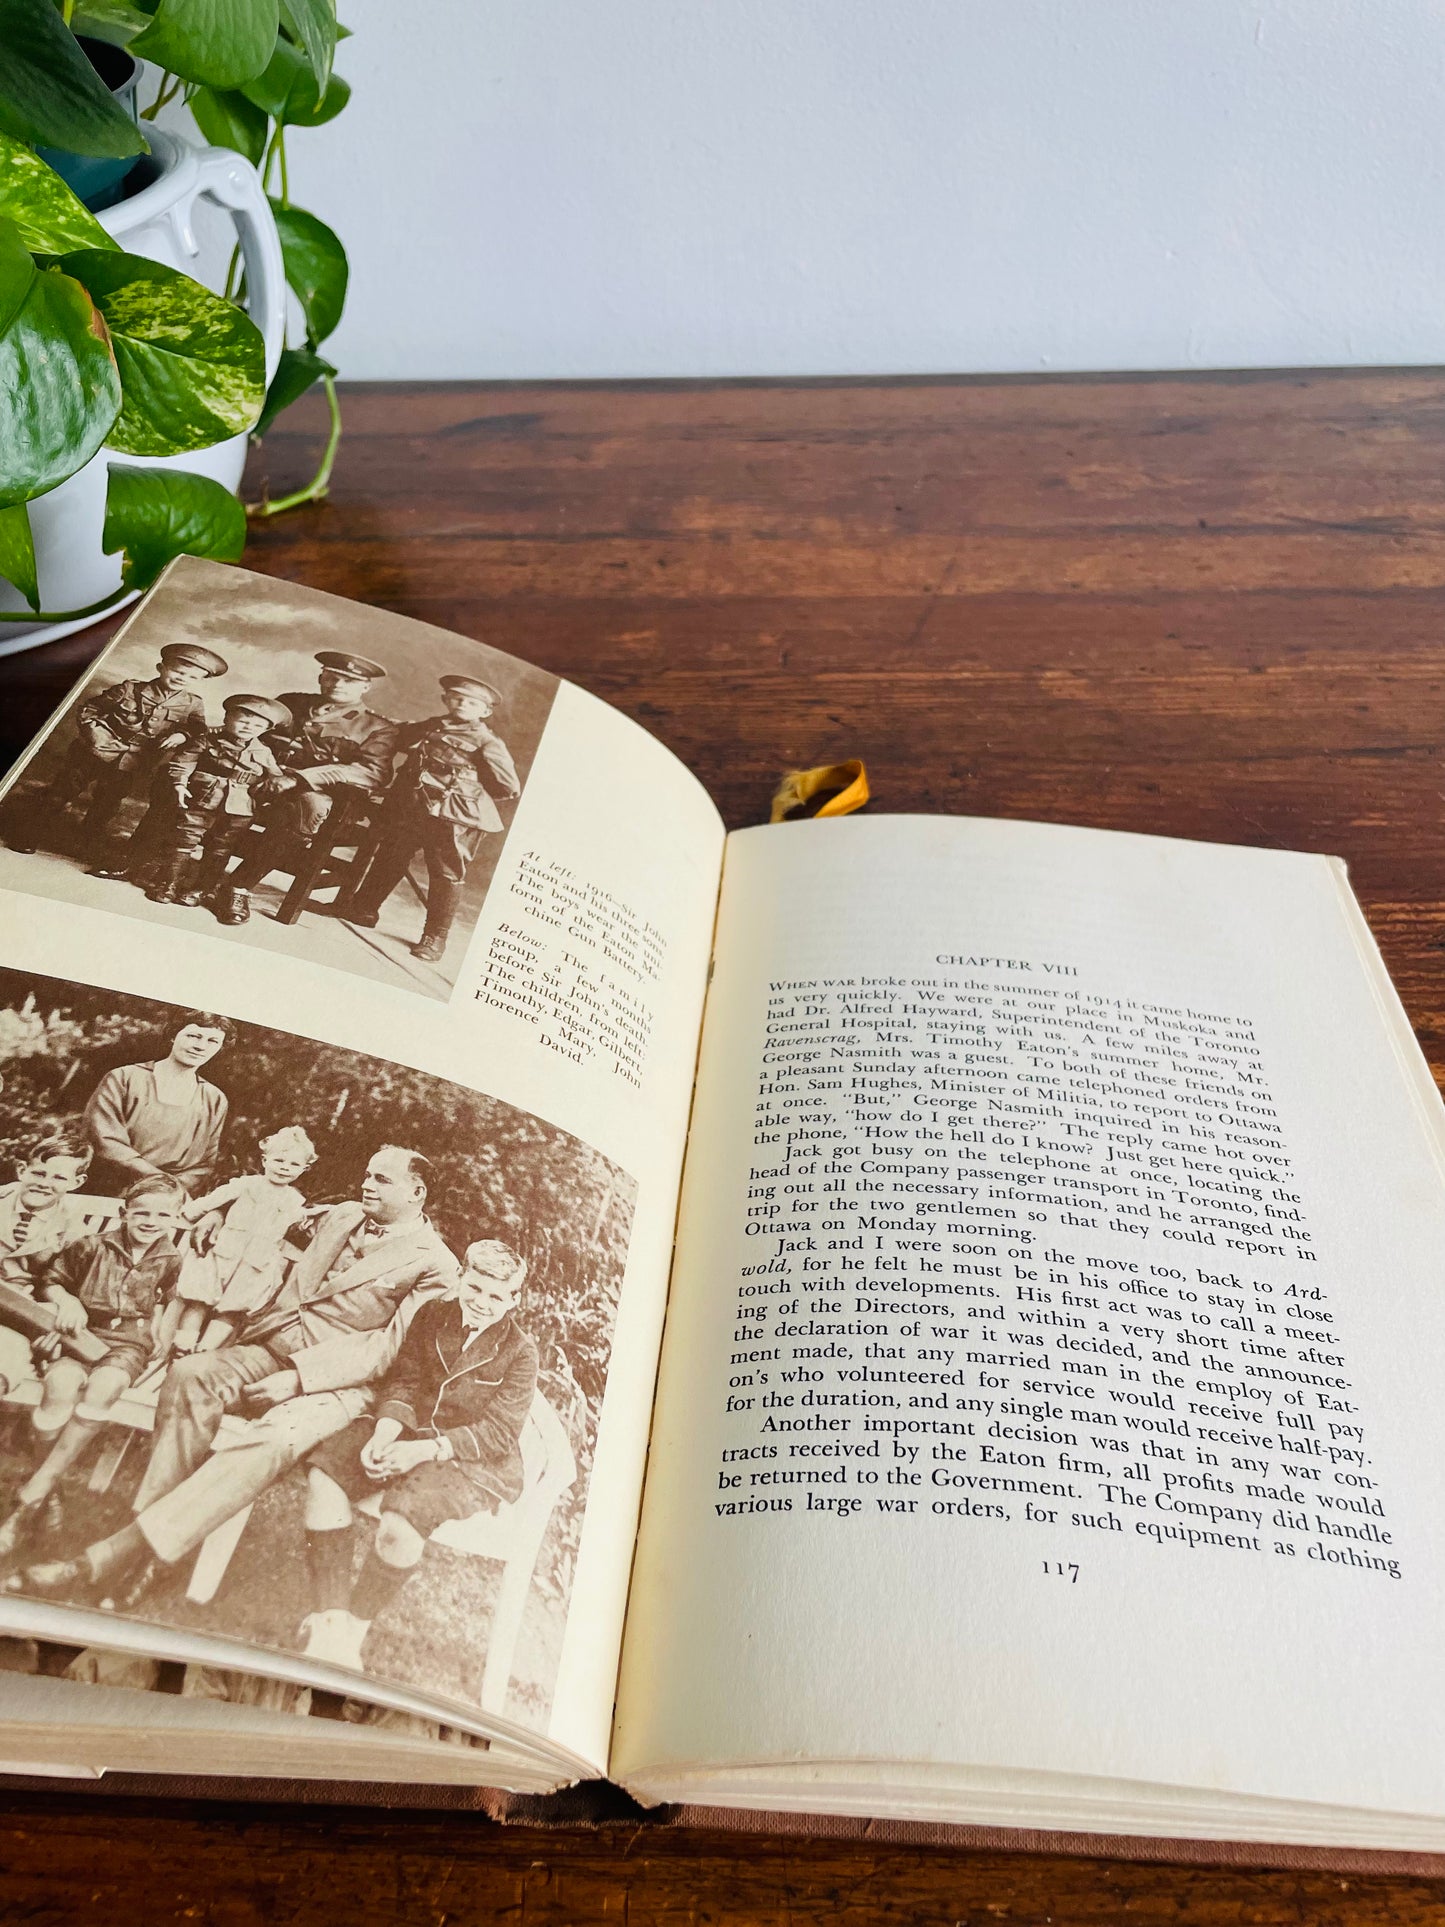 Memory's Wall: The Autobiography of Flora McCrea Eaton Hardcover Book (1956)